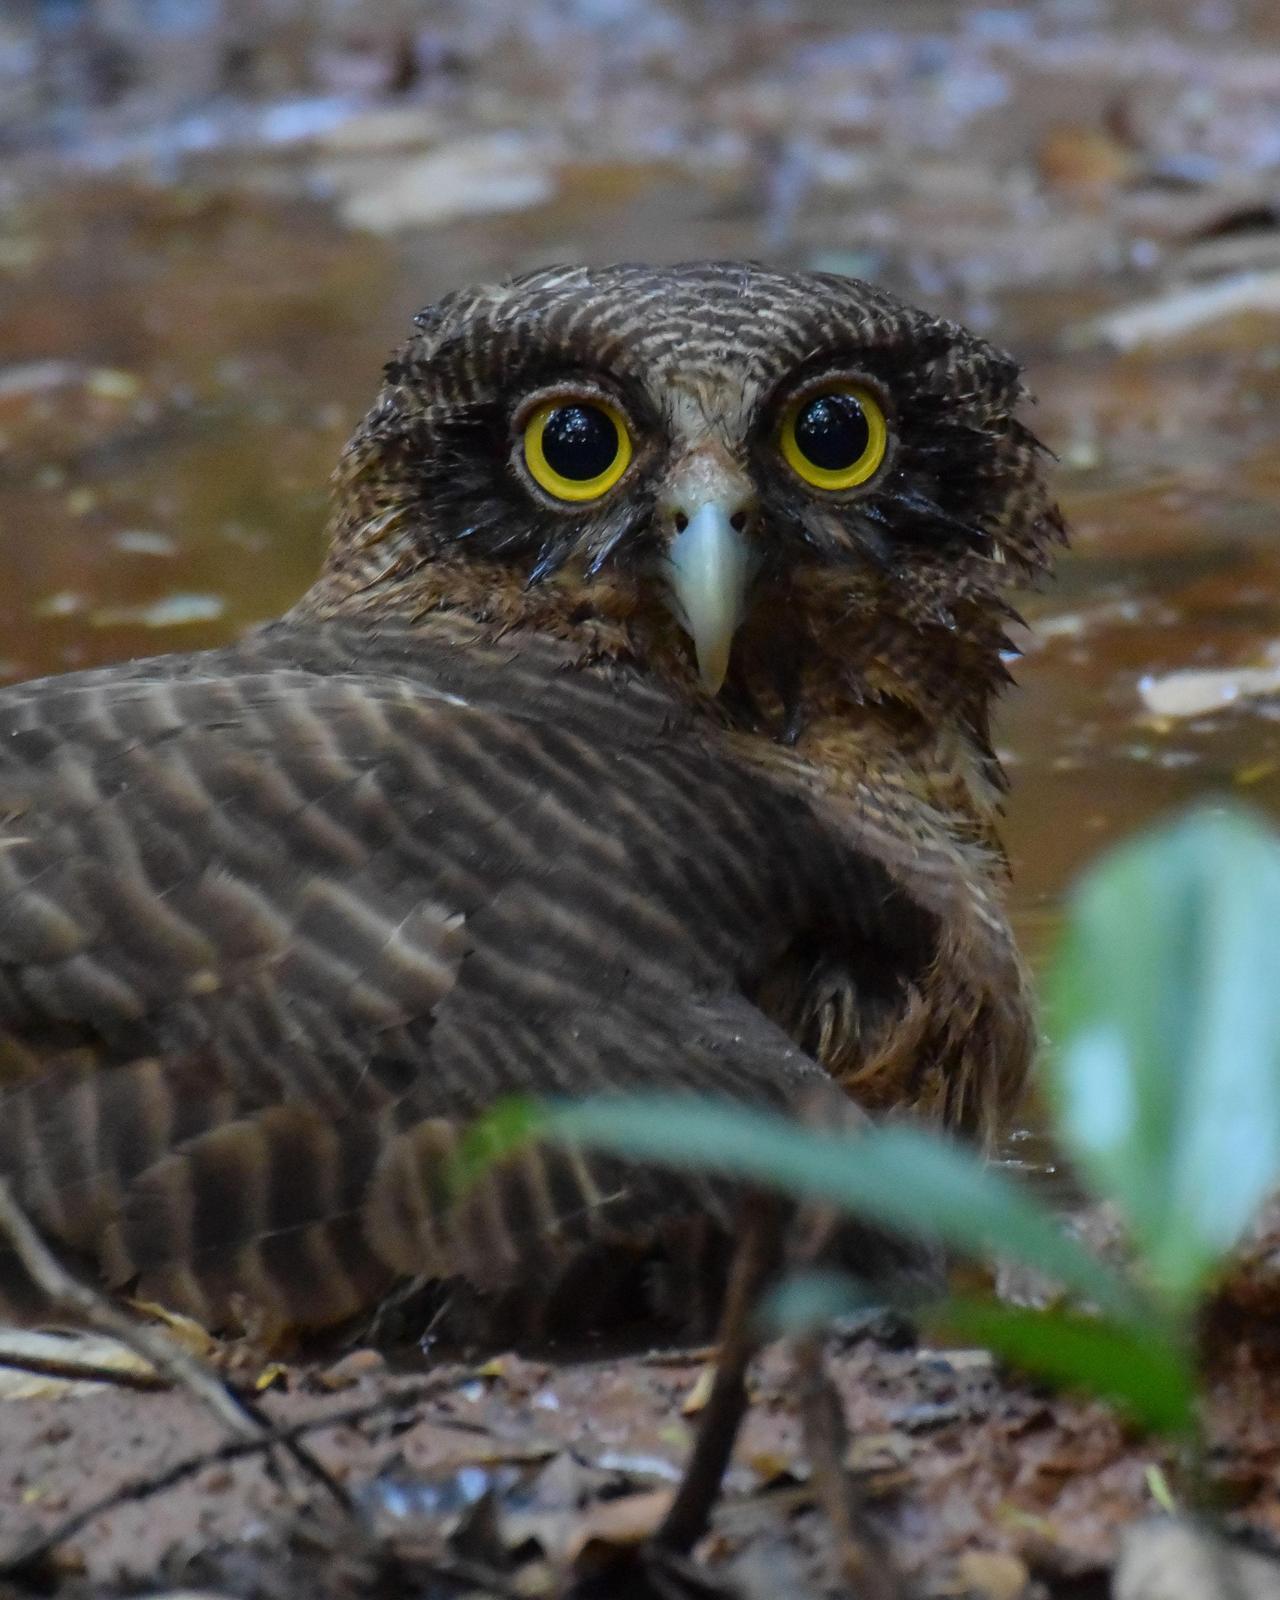 Rufous Owl Photo by Steve Percival